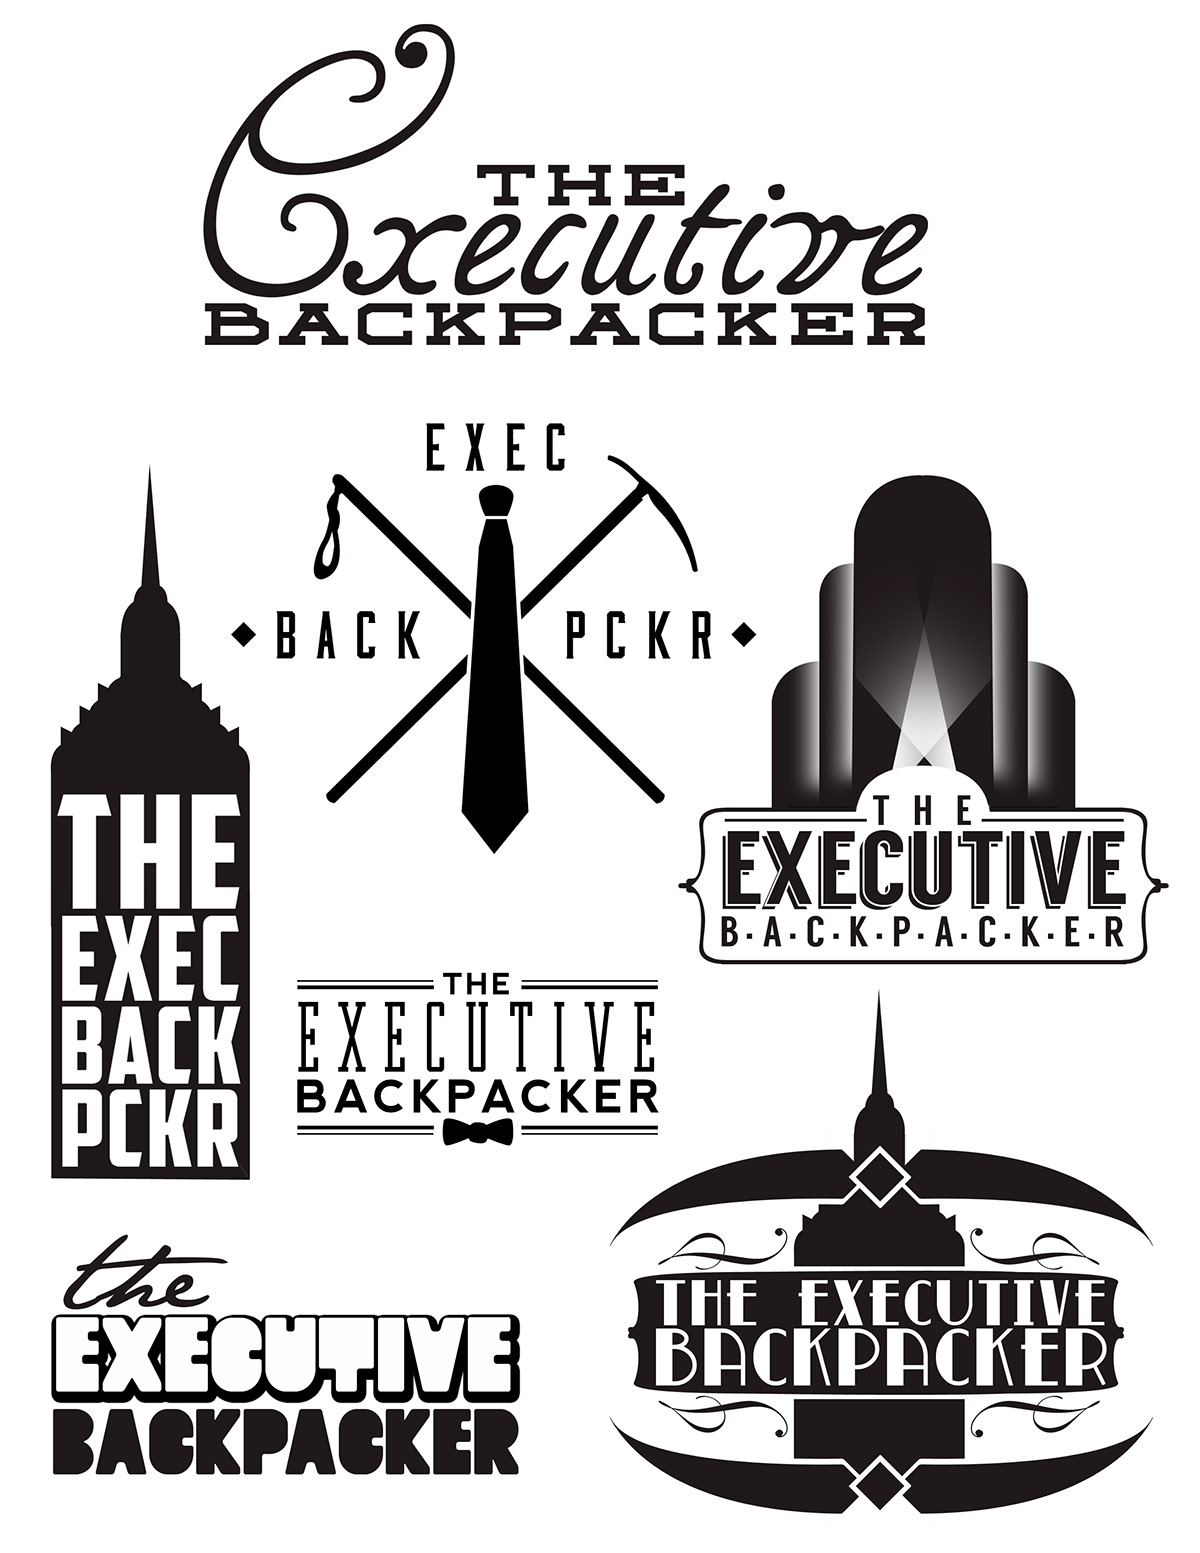 The Executive Backpacker